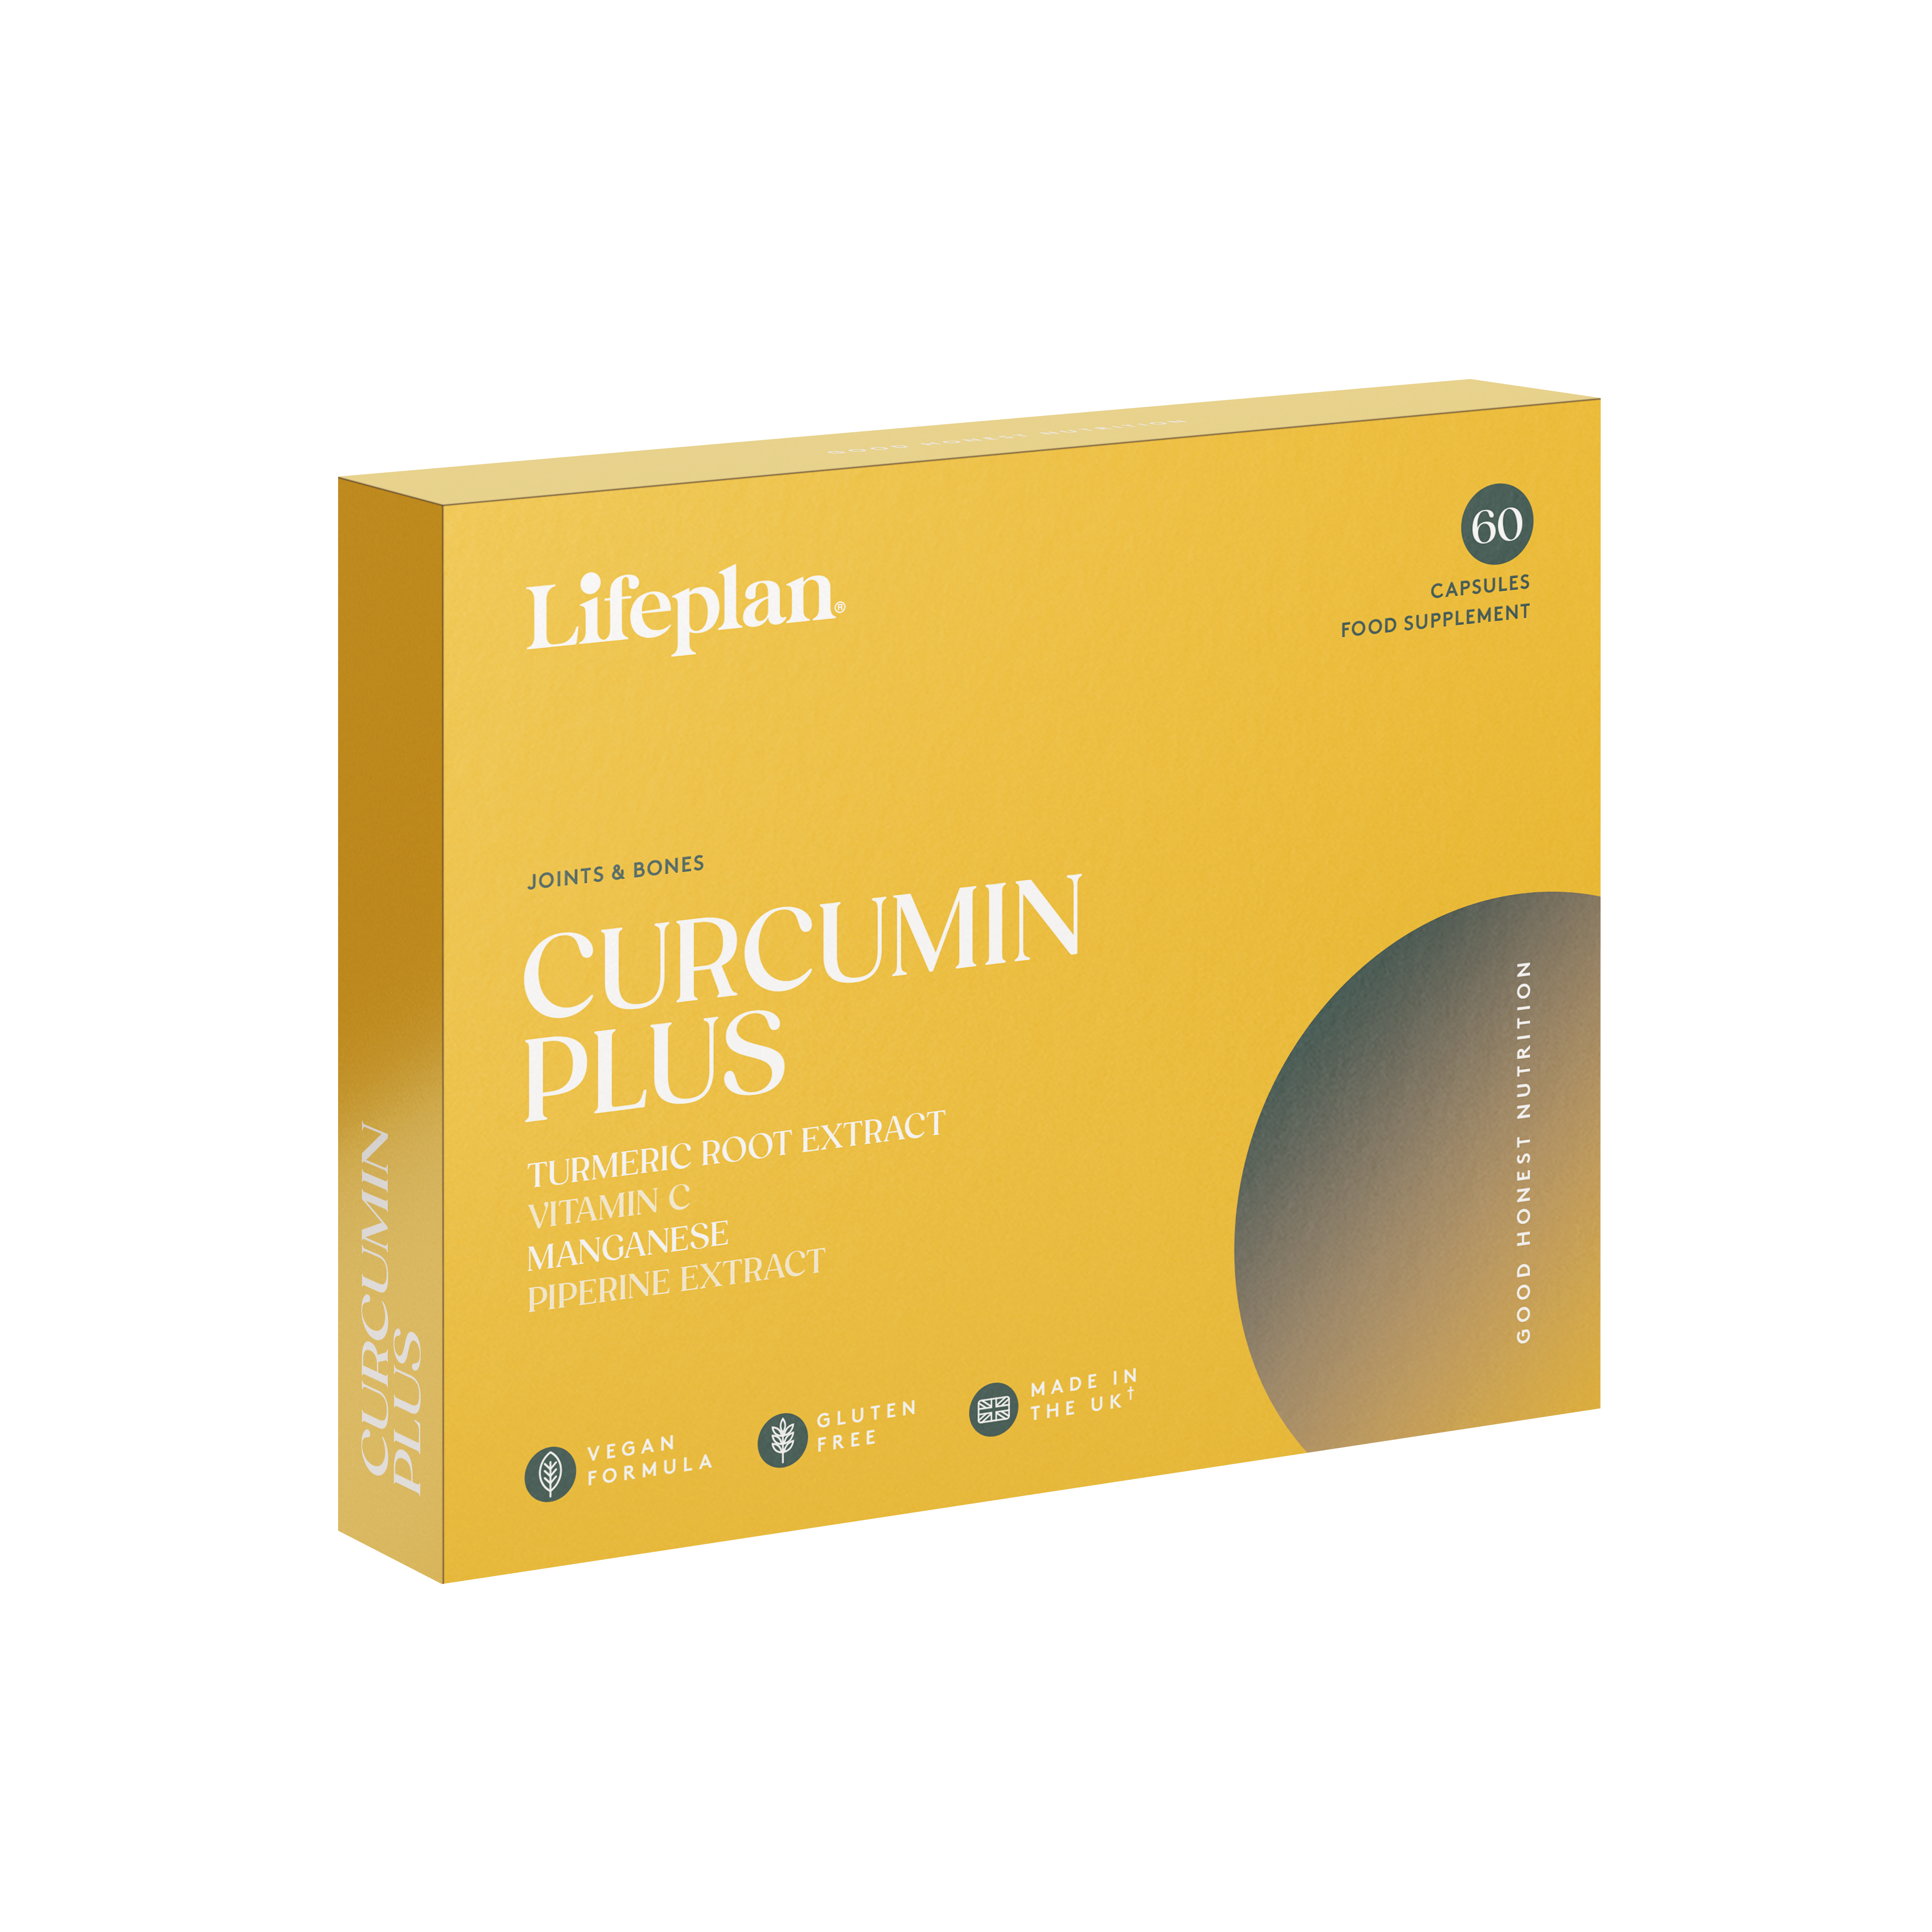 Curcumin Plus